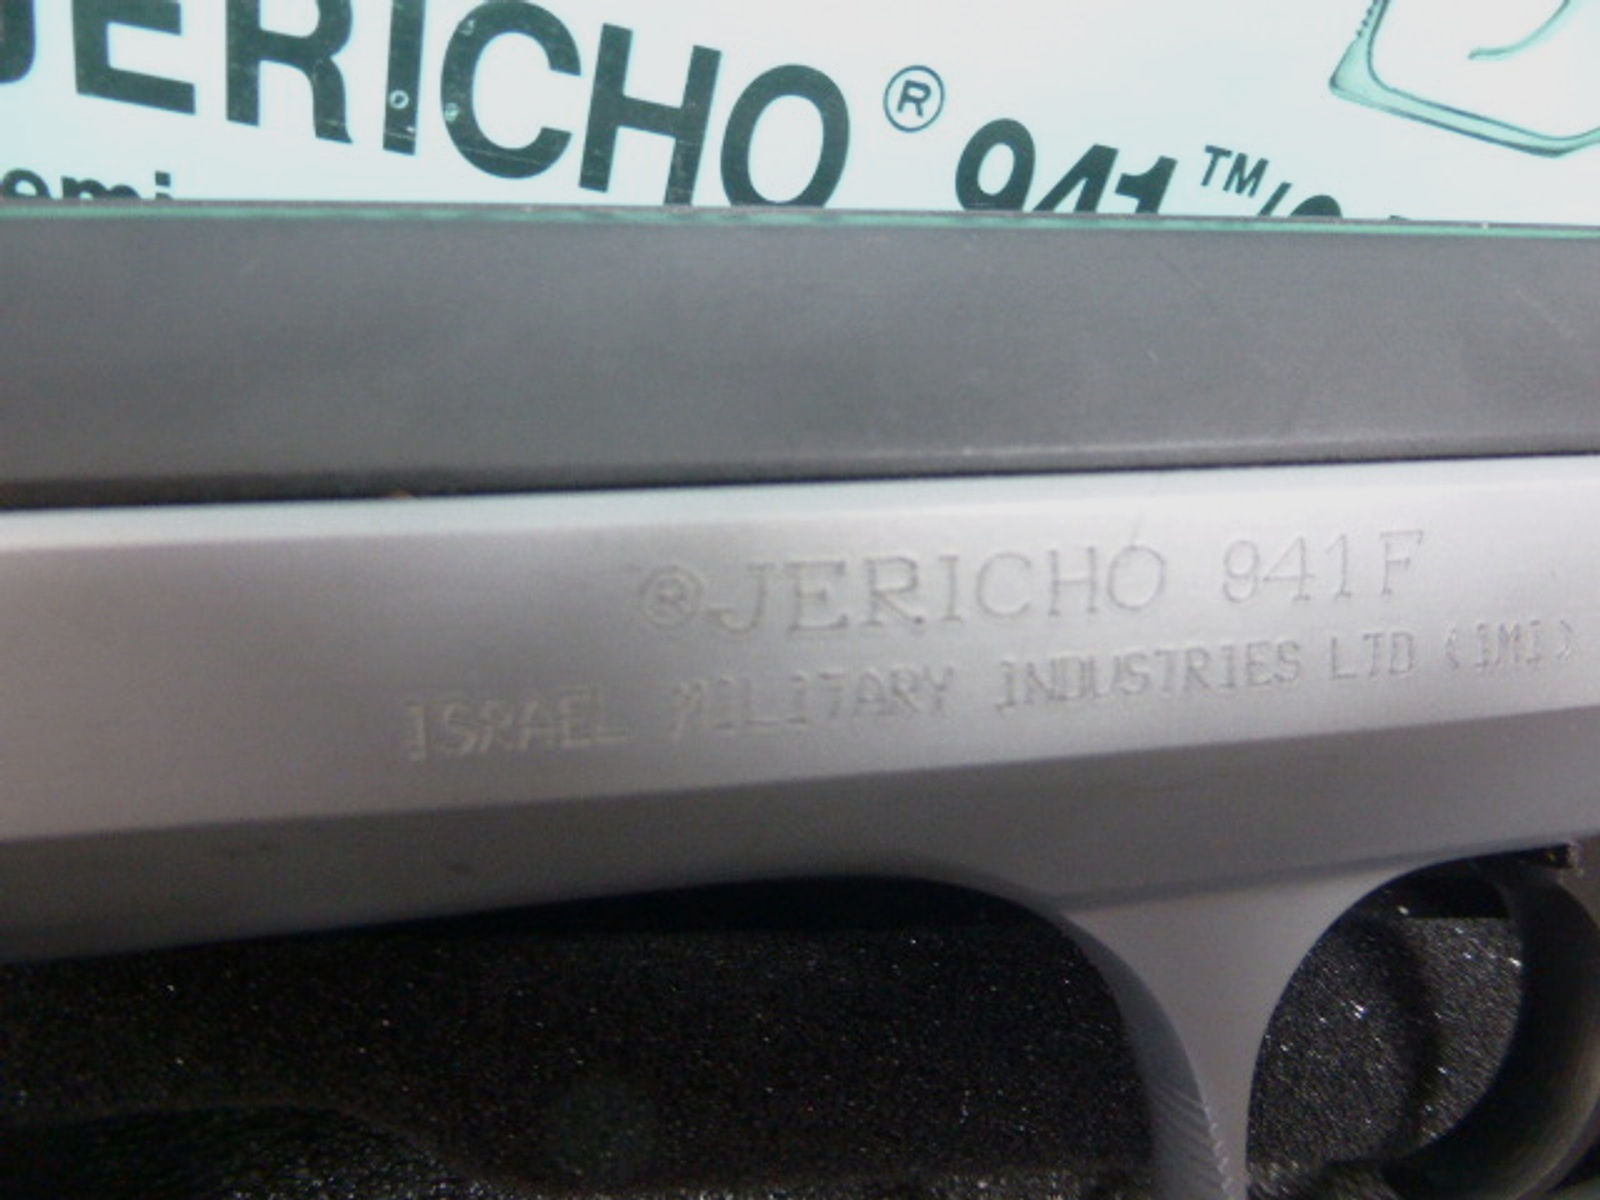 Pistole Hersteller IMI Modell Jericho 941 Kaliber 9mm Luger